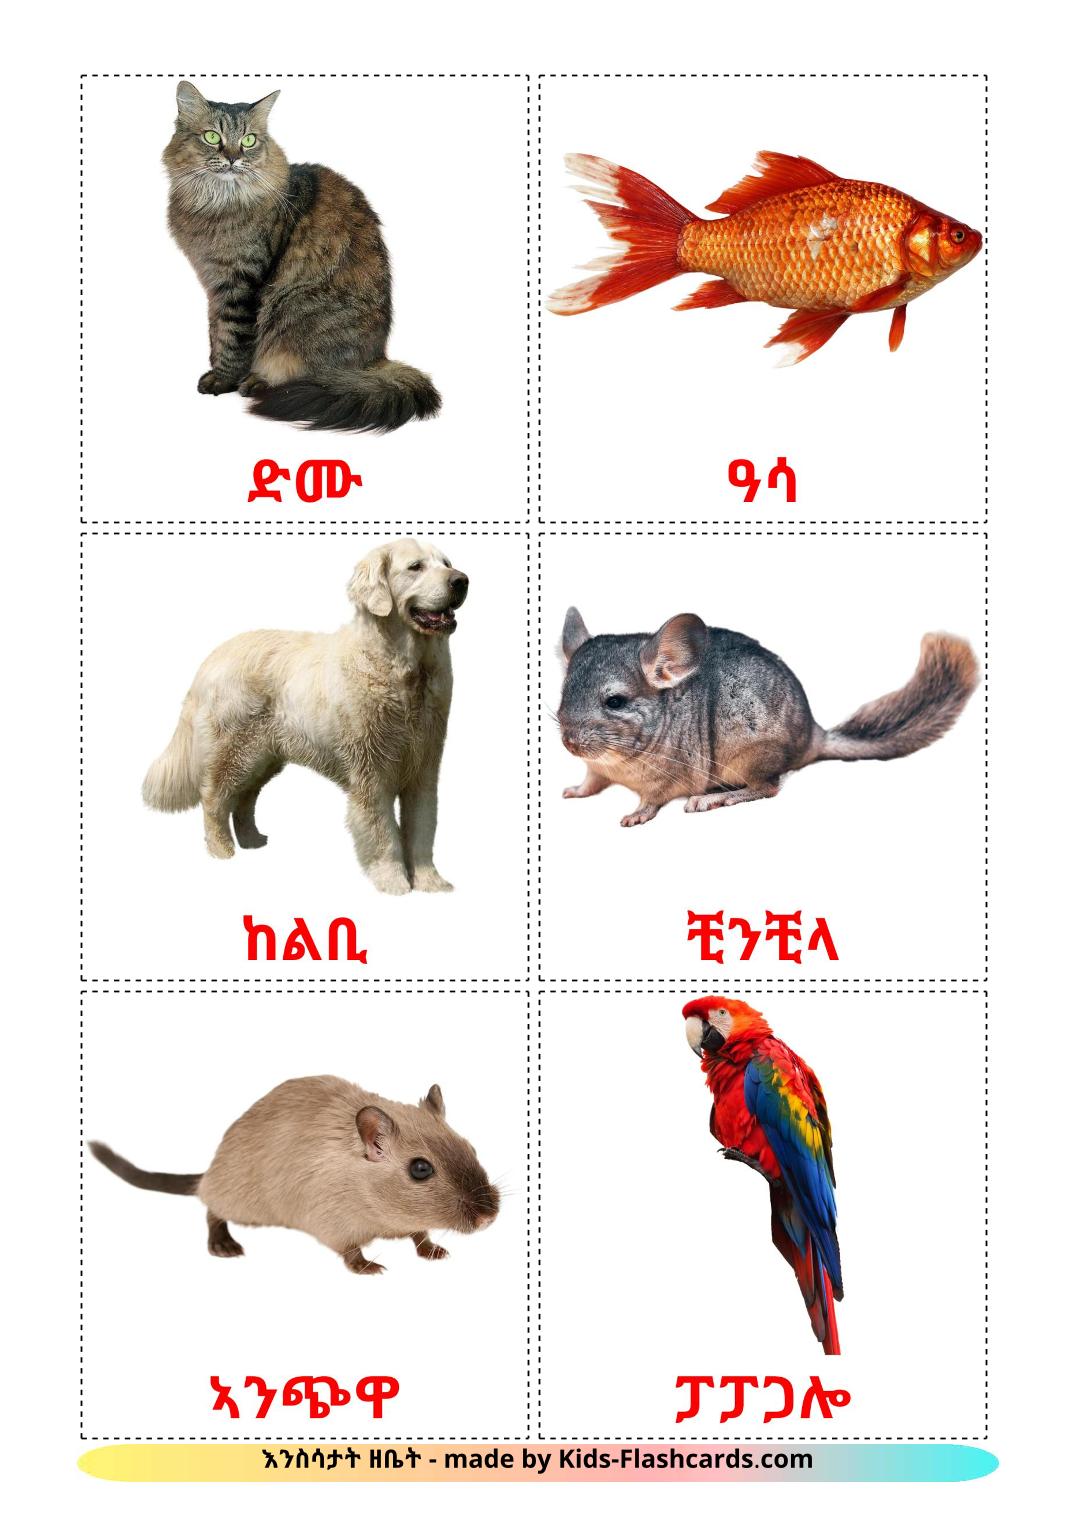 Animales Domésticos - 10 fichas de tigrigna(Eritrea) para imprimir gratis 